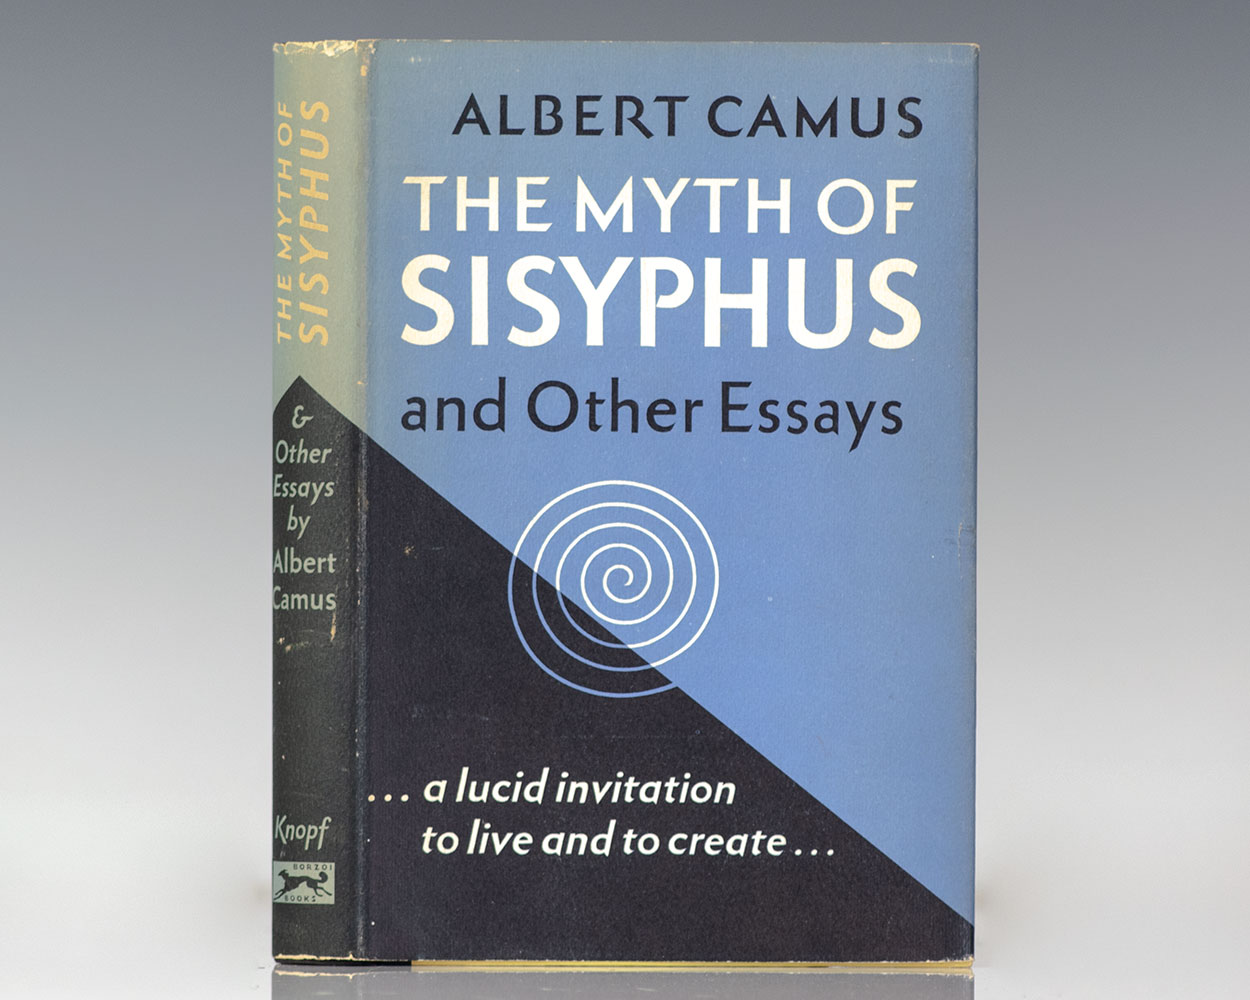 essay on the myth of sisyphus